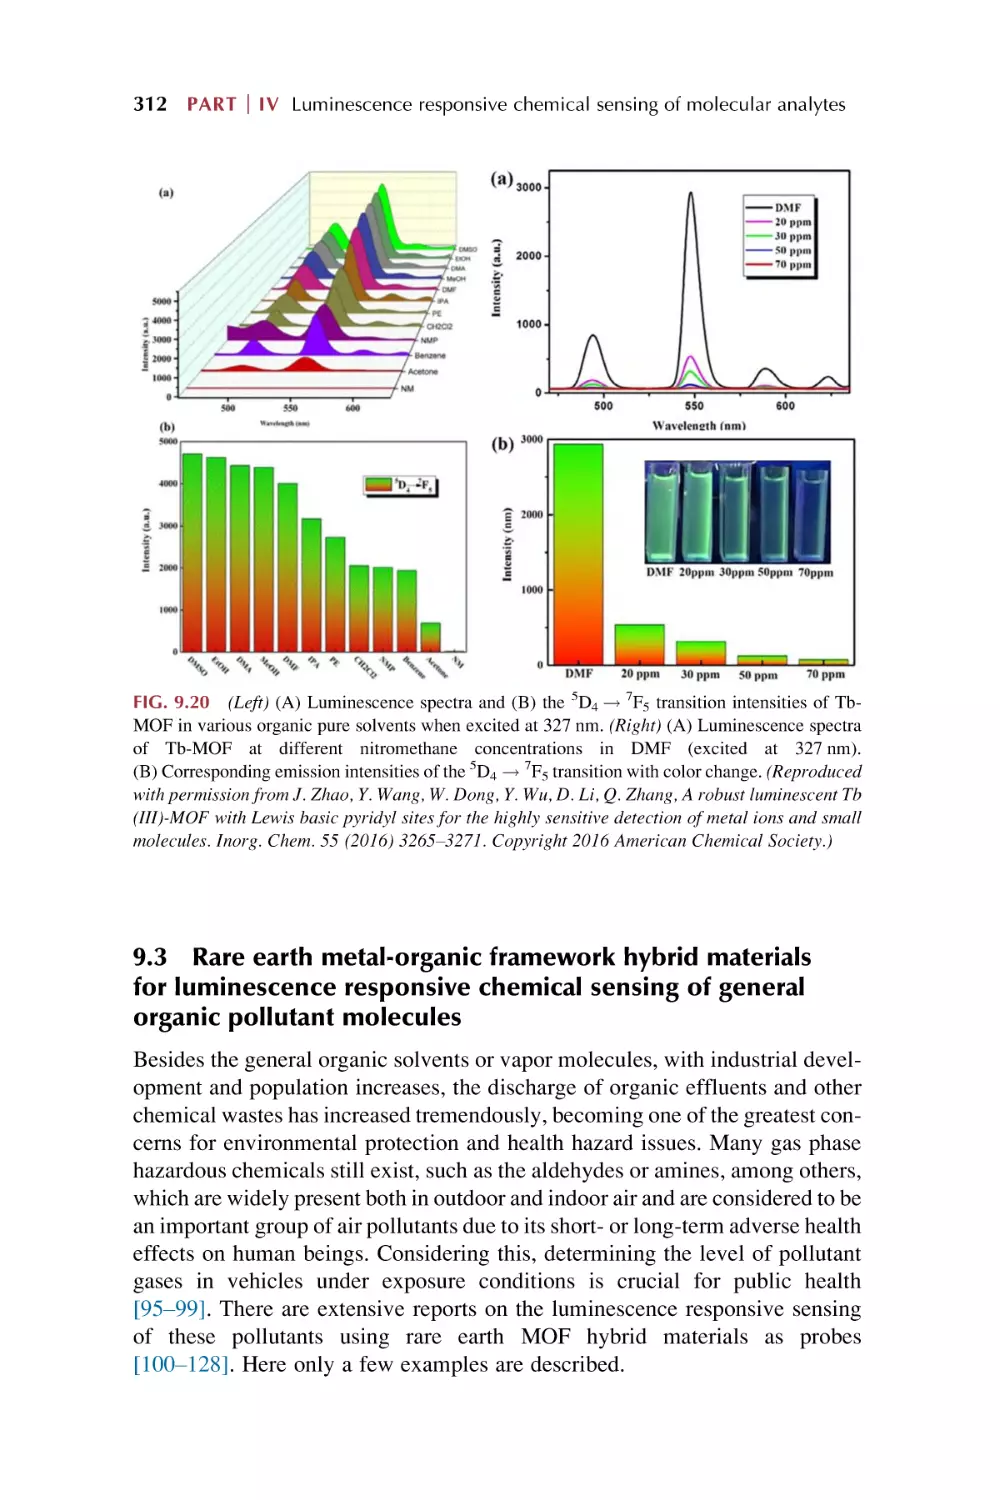 9.3. Rare earth metal-organic framework hybrid materials for luminescence responsive chemical sensing of general organic  ...